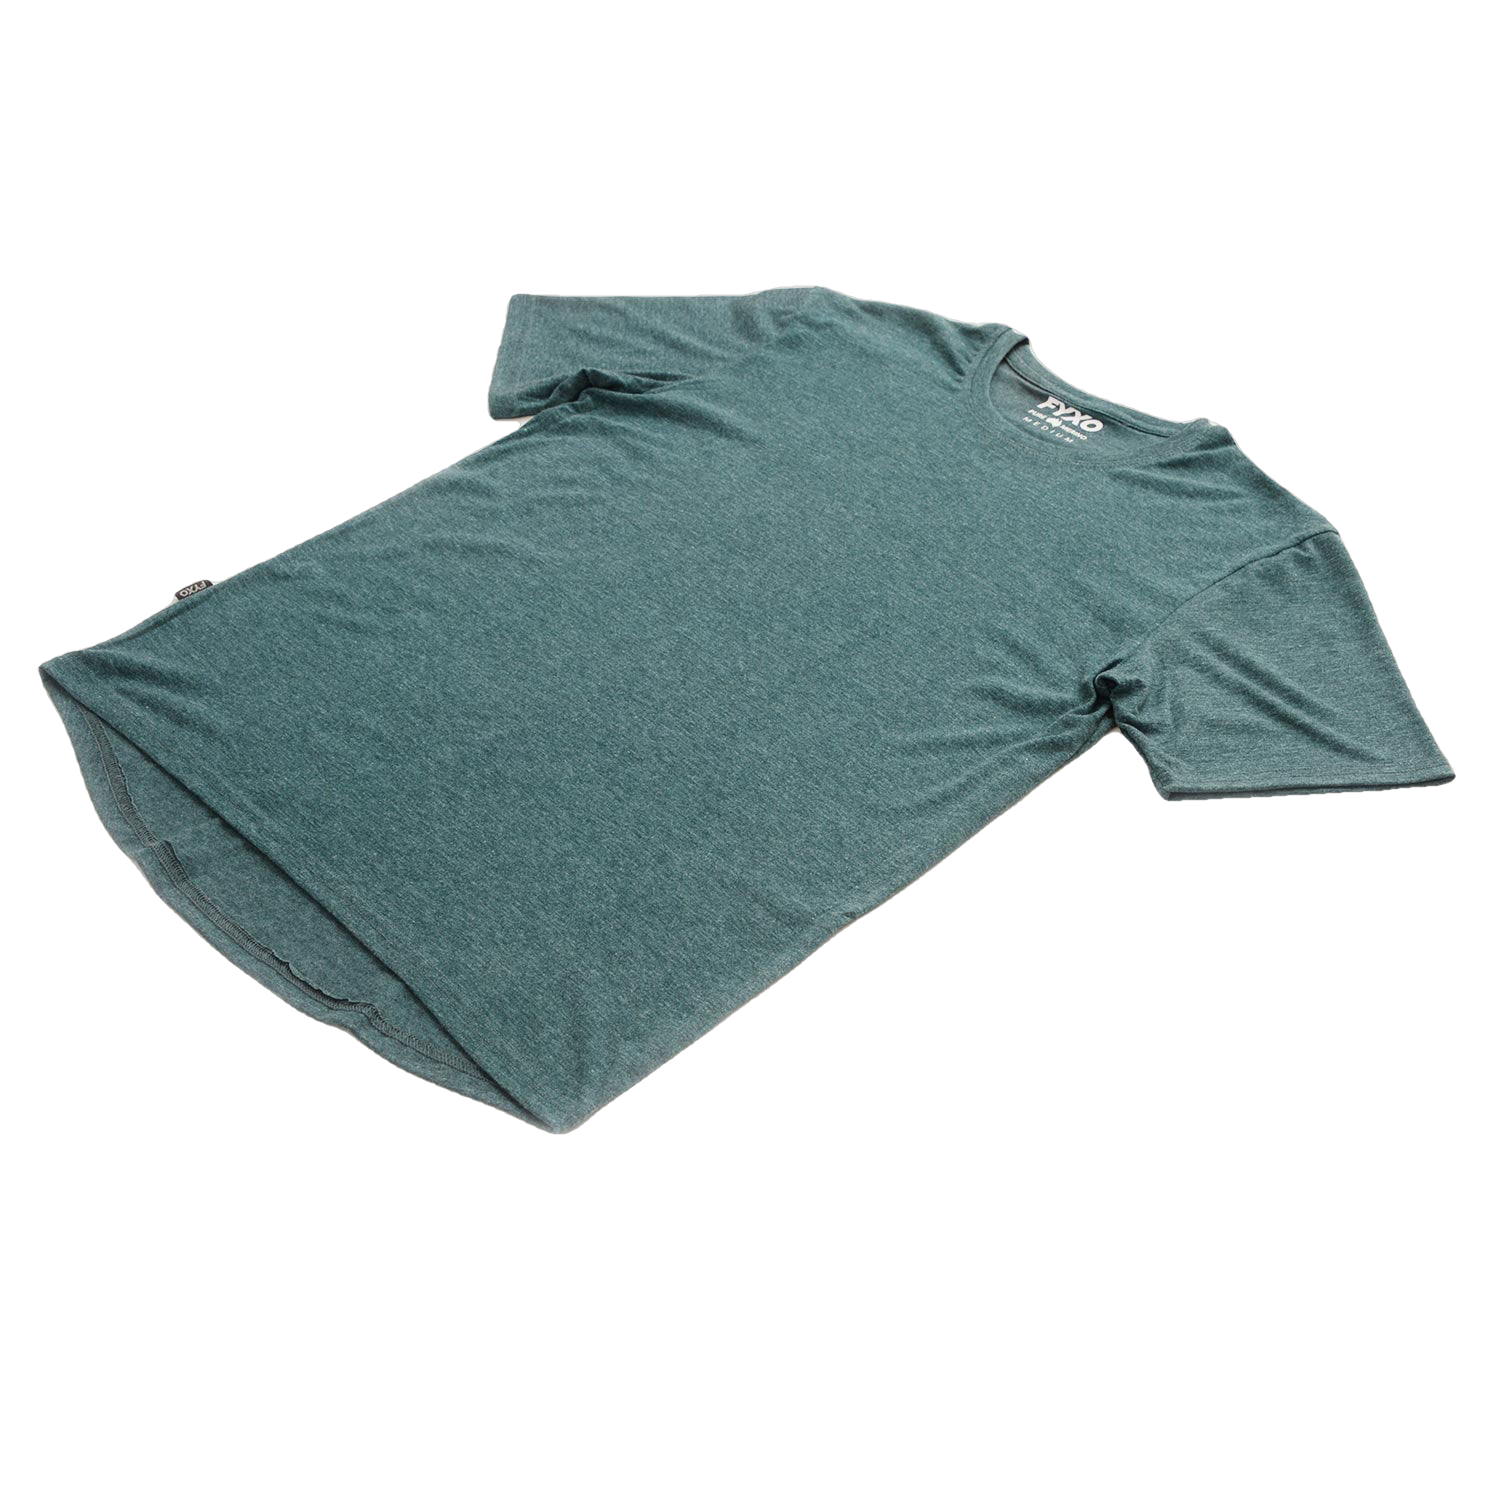 Merino Short Sleeve T-shirt - FYXO